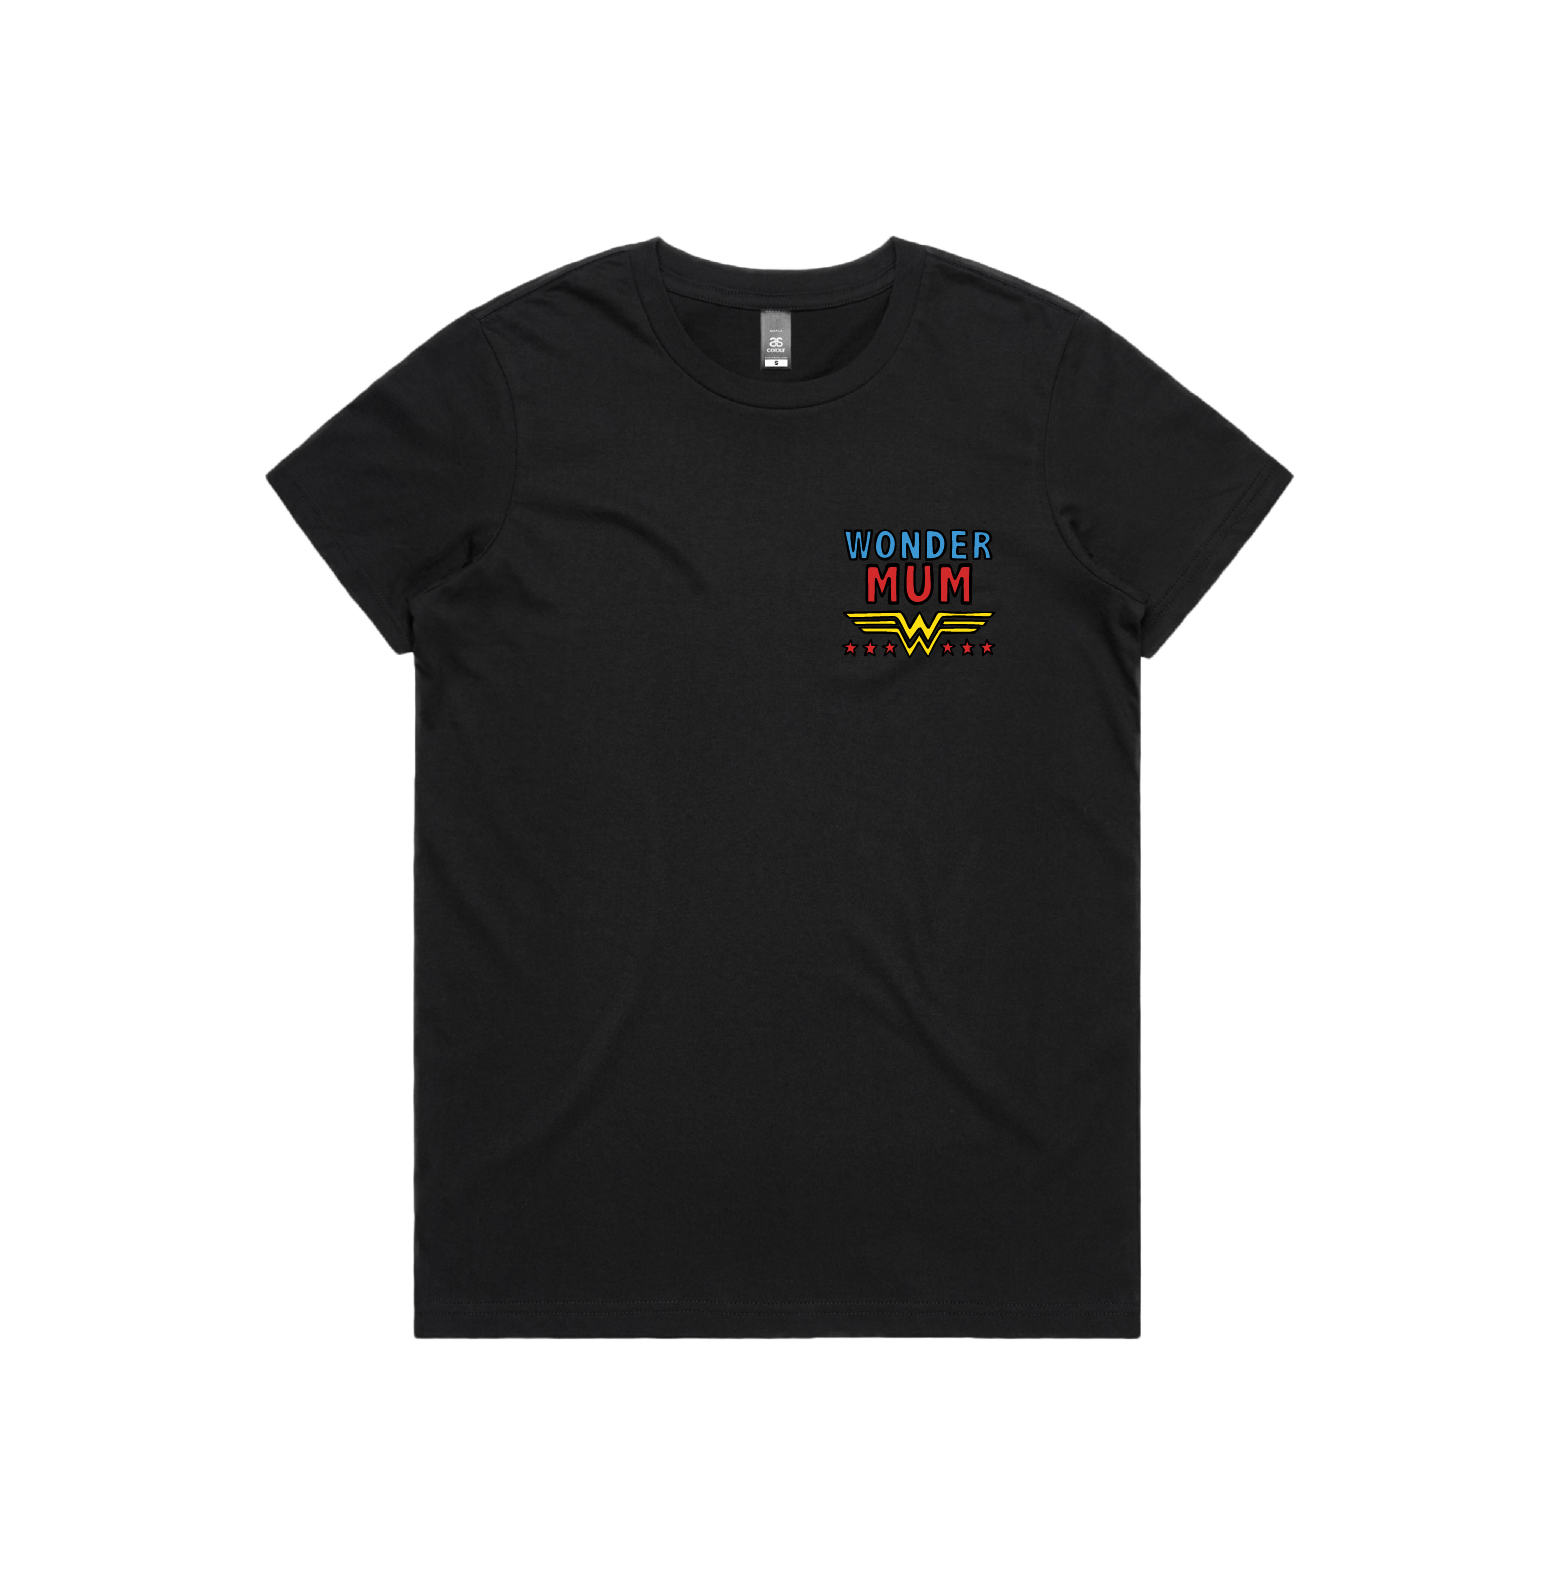 XS / Black / Small Front Design Wondermum 🦸‍♀️ - Women's T Shirt